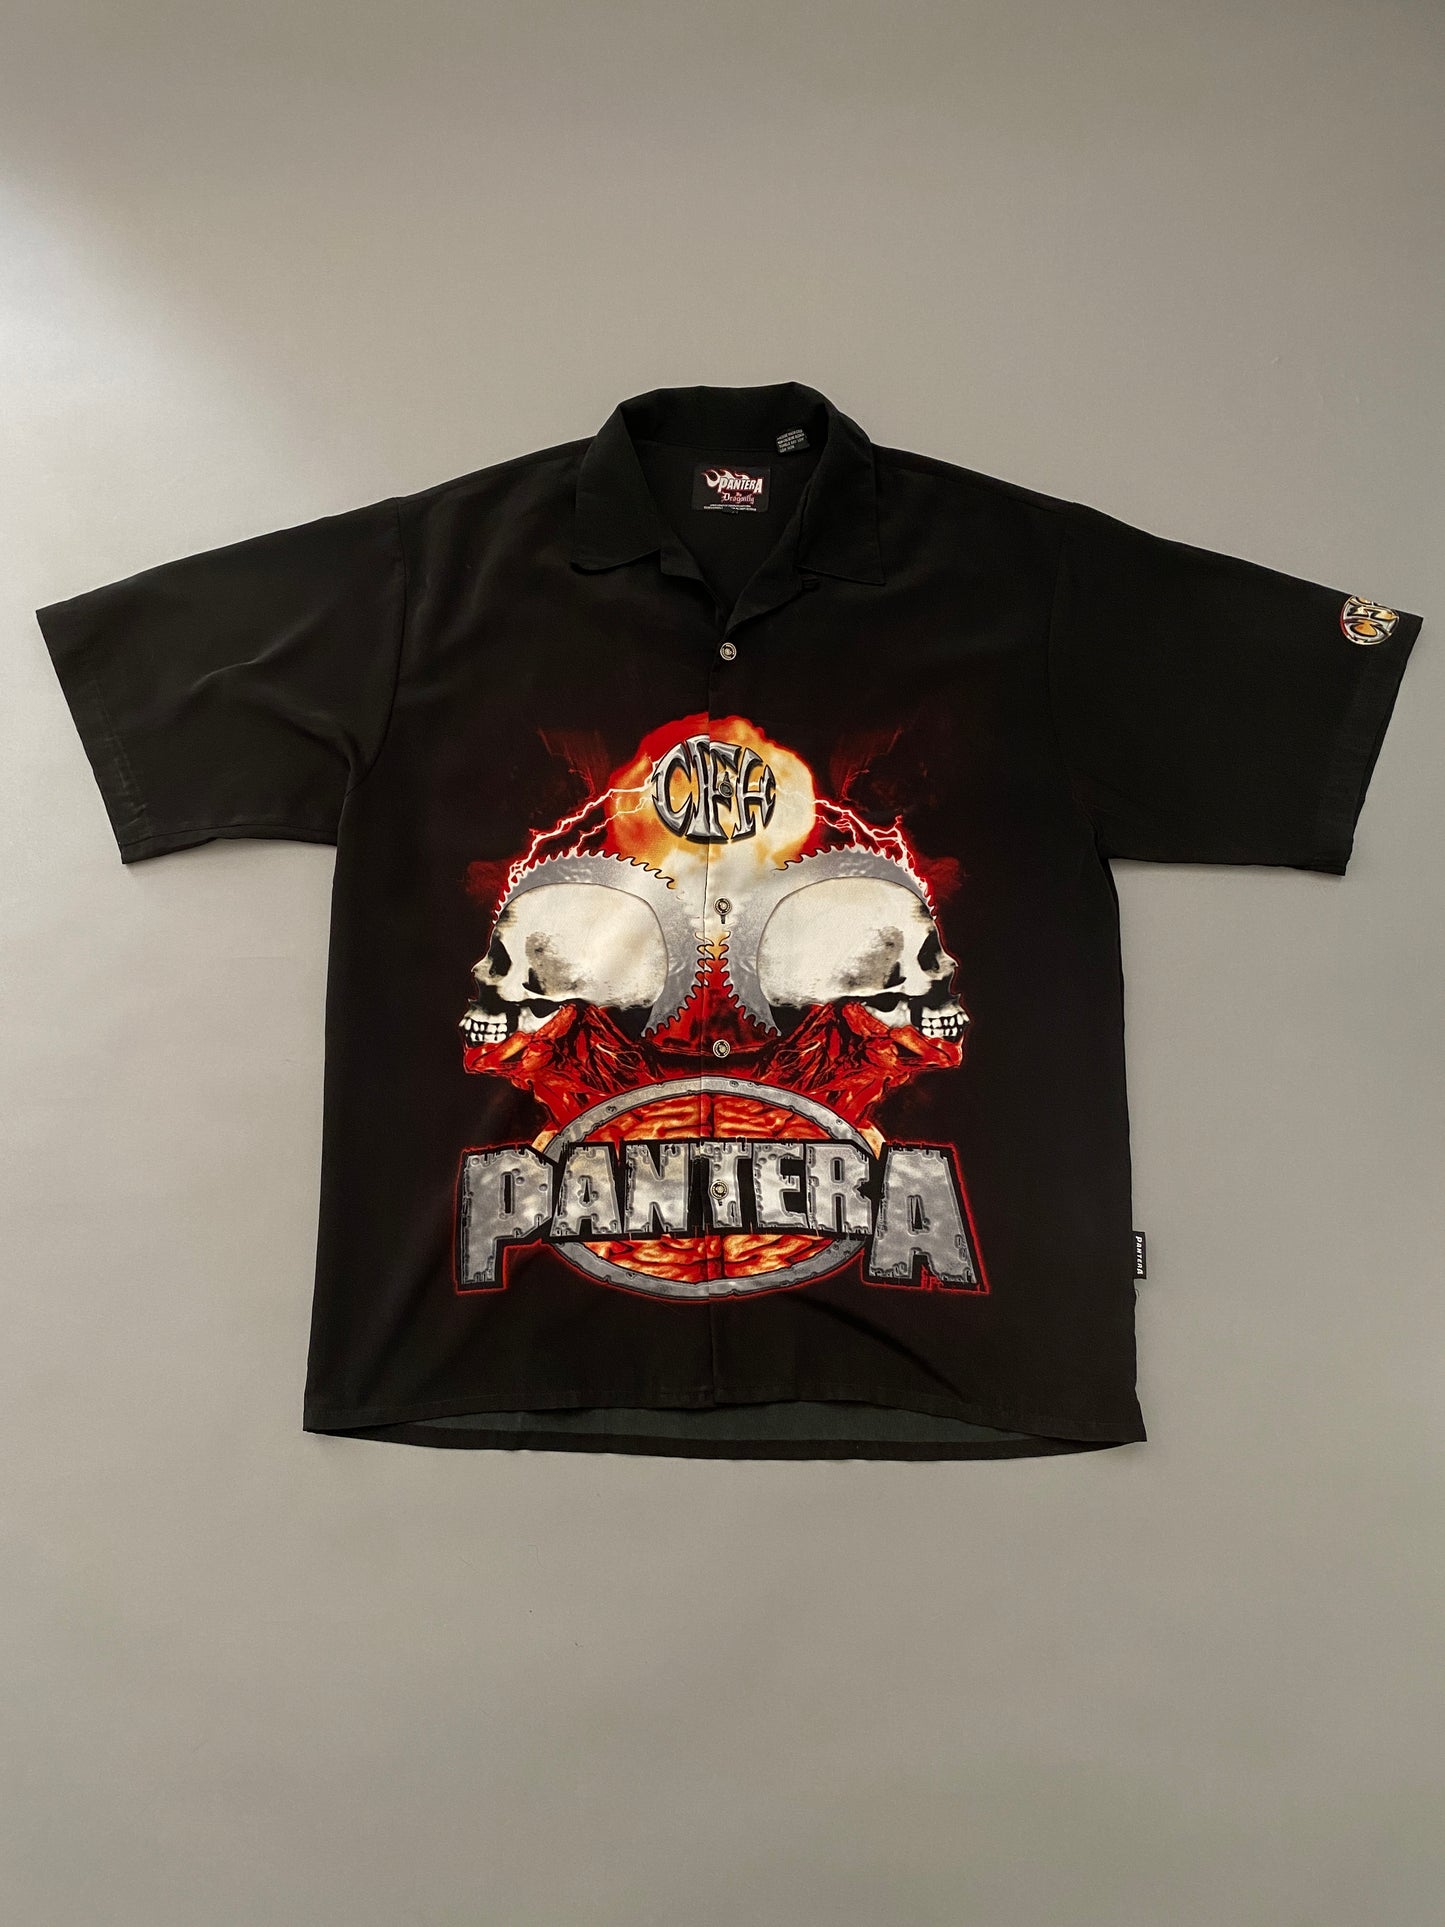 Vintage Panther Dragonfly Shirt